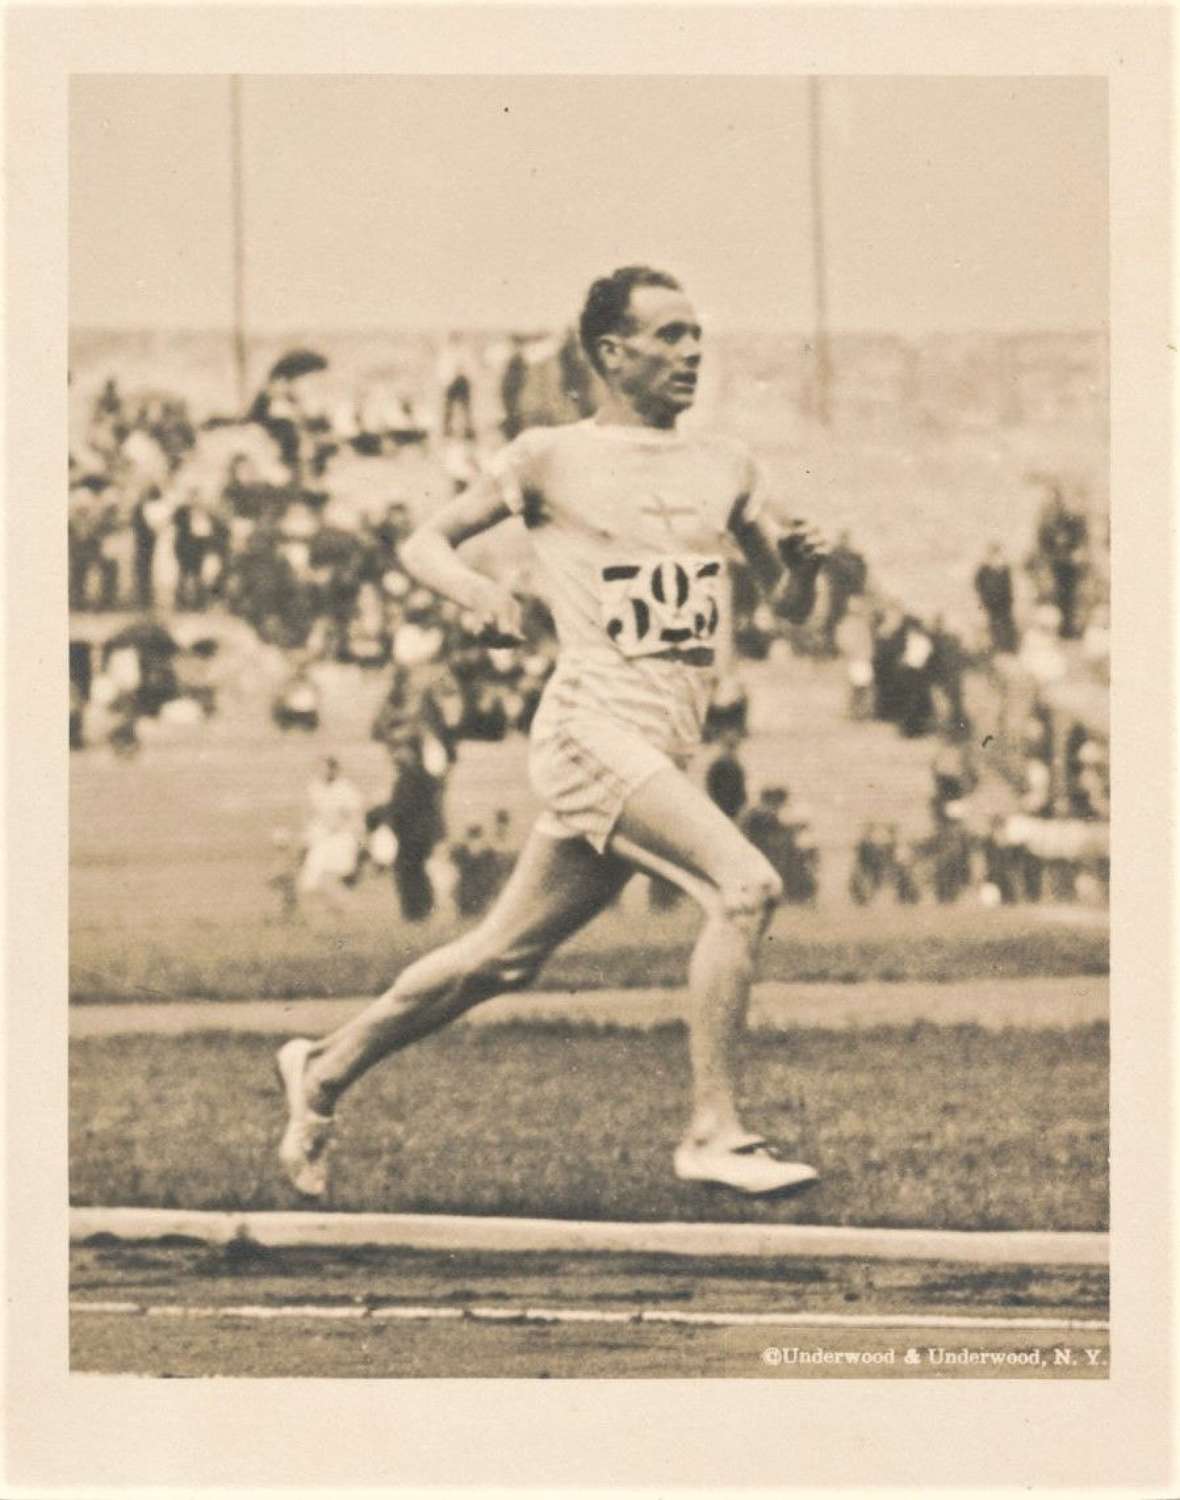 Photo of Paavo Nurmi, Finnish Runners, 1924 Paris Olympic.